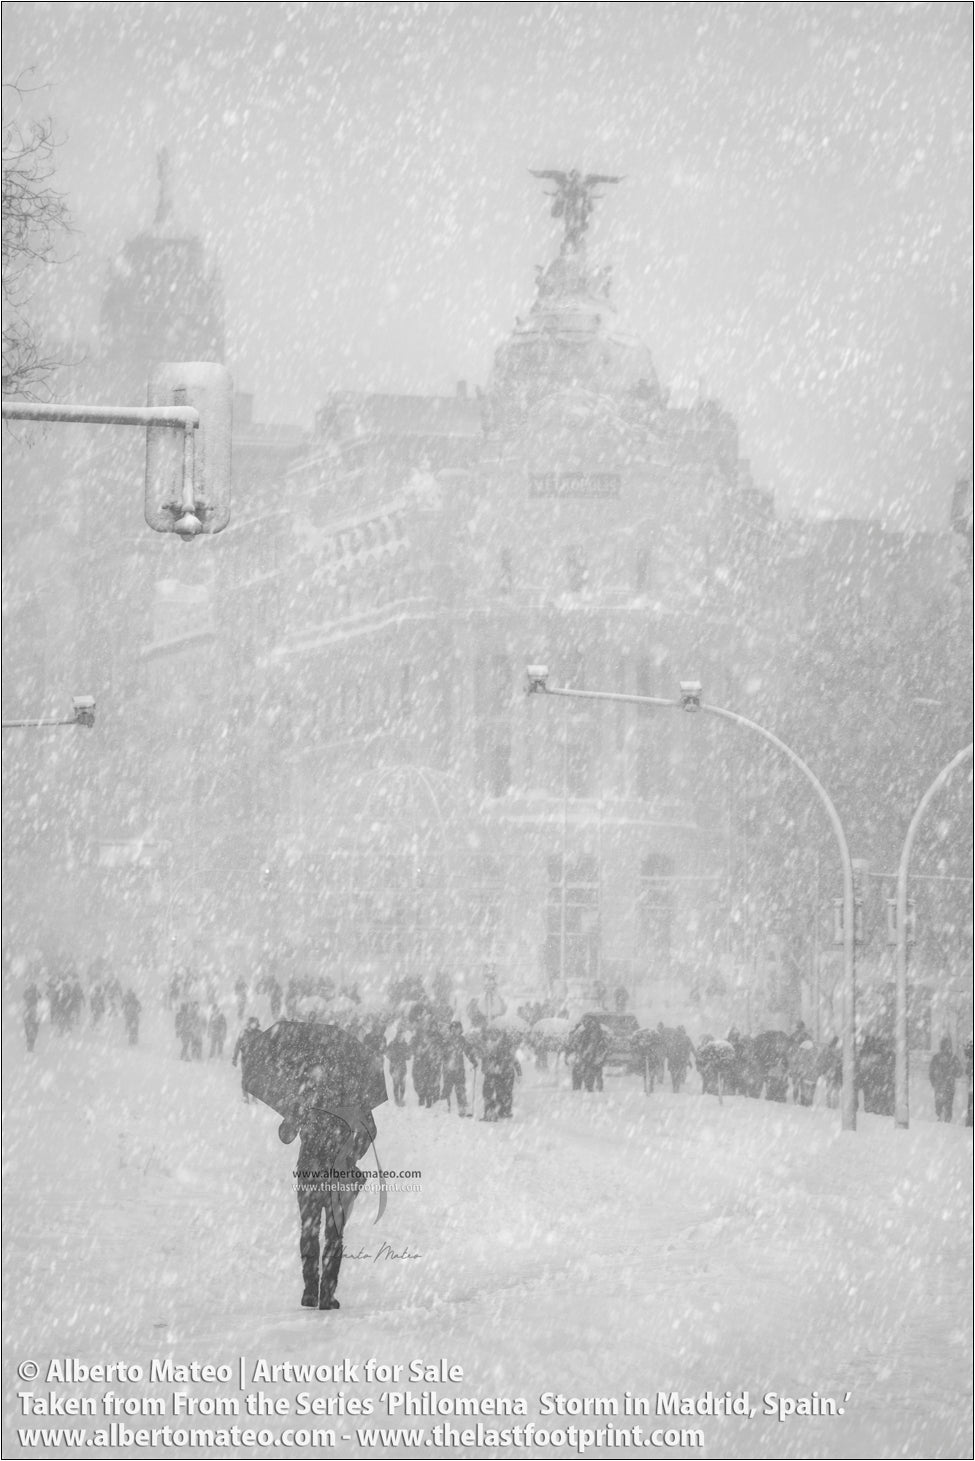 Edificio Metropolis, Calle Alcala, Filomena Winter Snow Storm, Madrid, Spain.